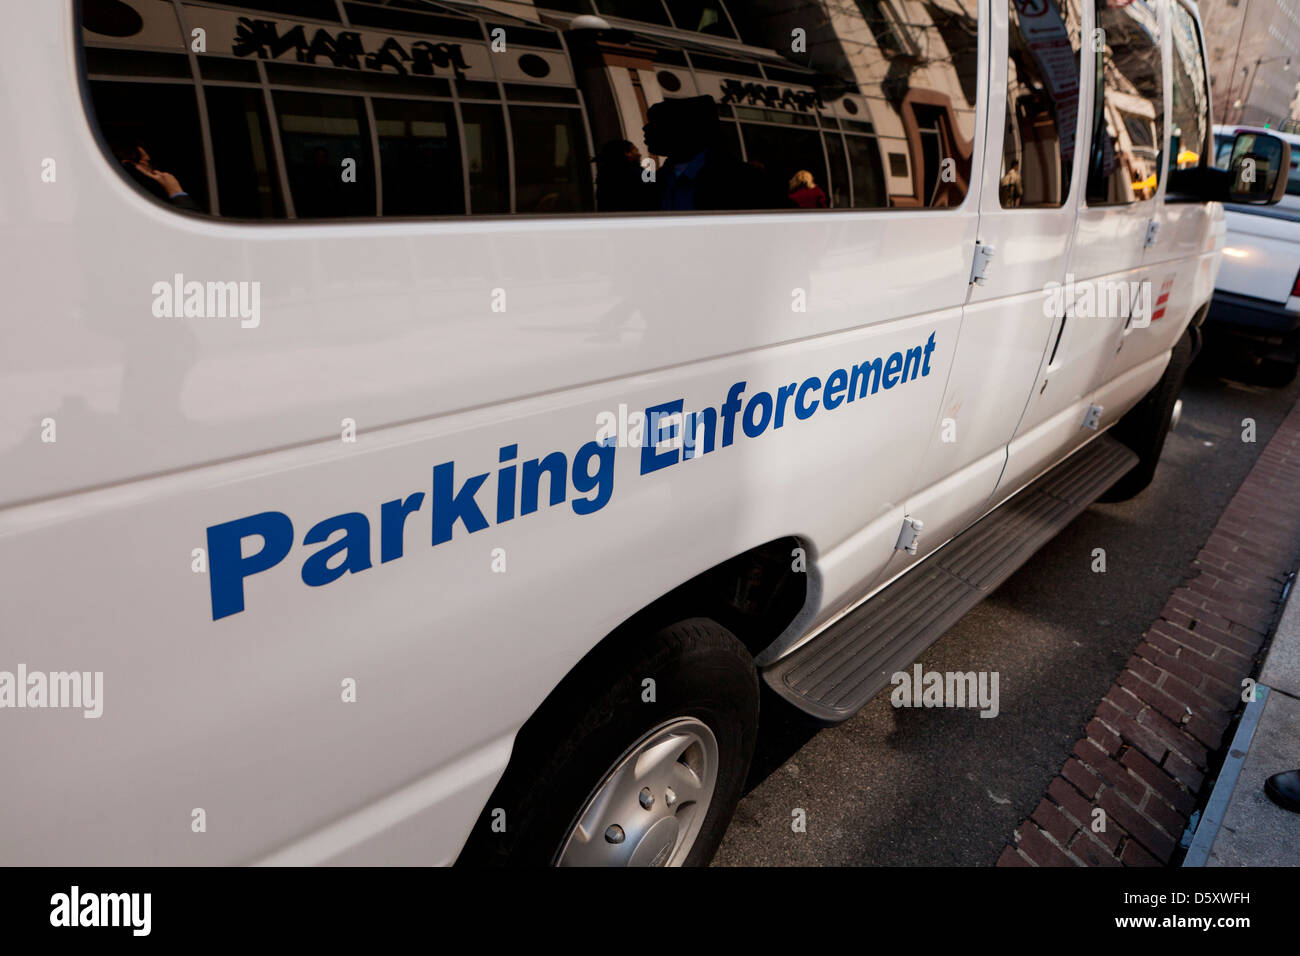 Parking enforcement van - Washington, DC USA Stock Photo